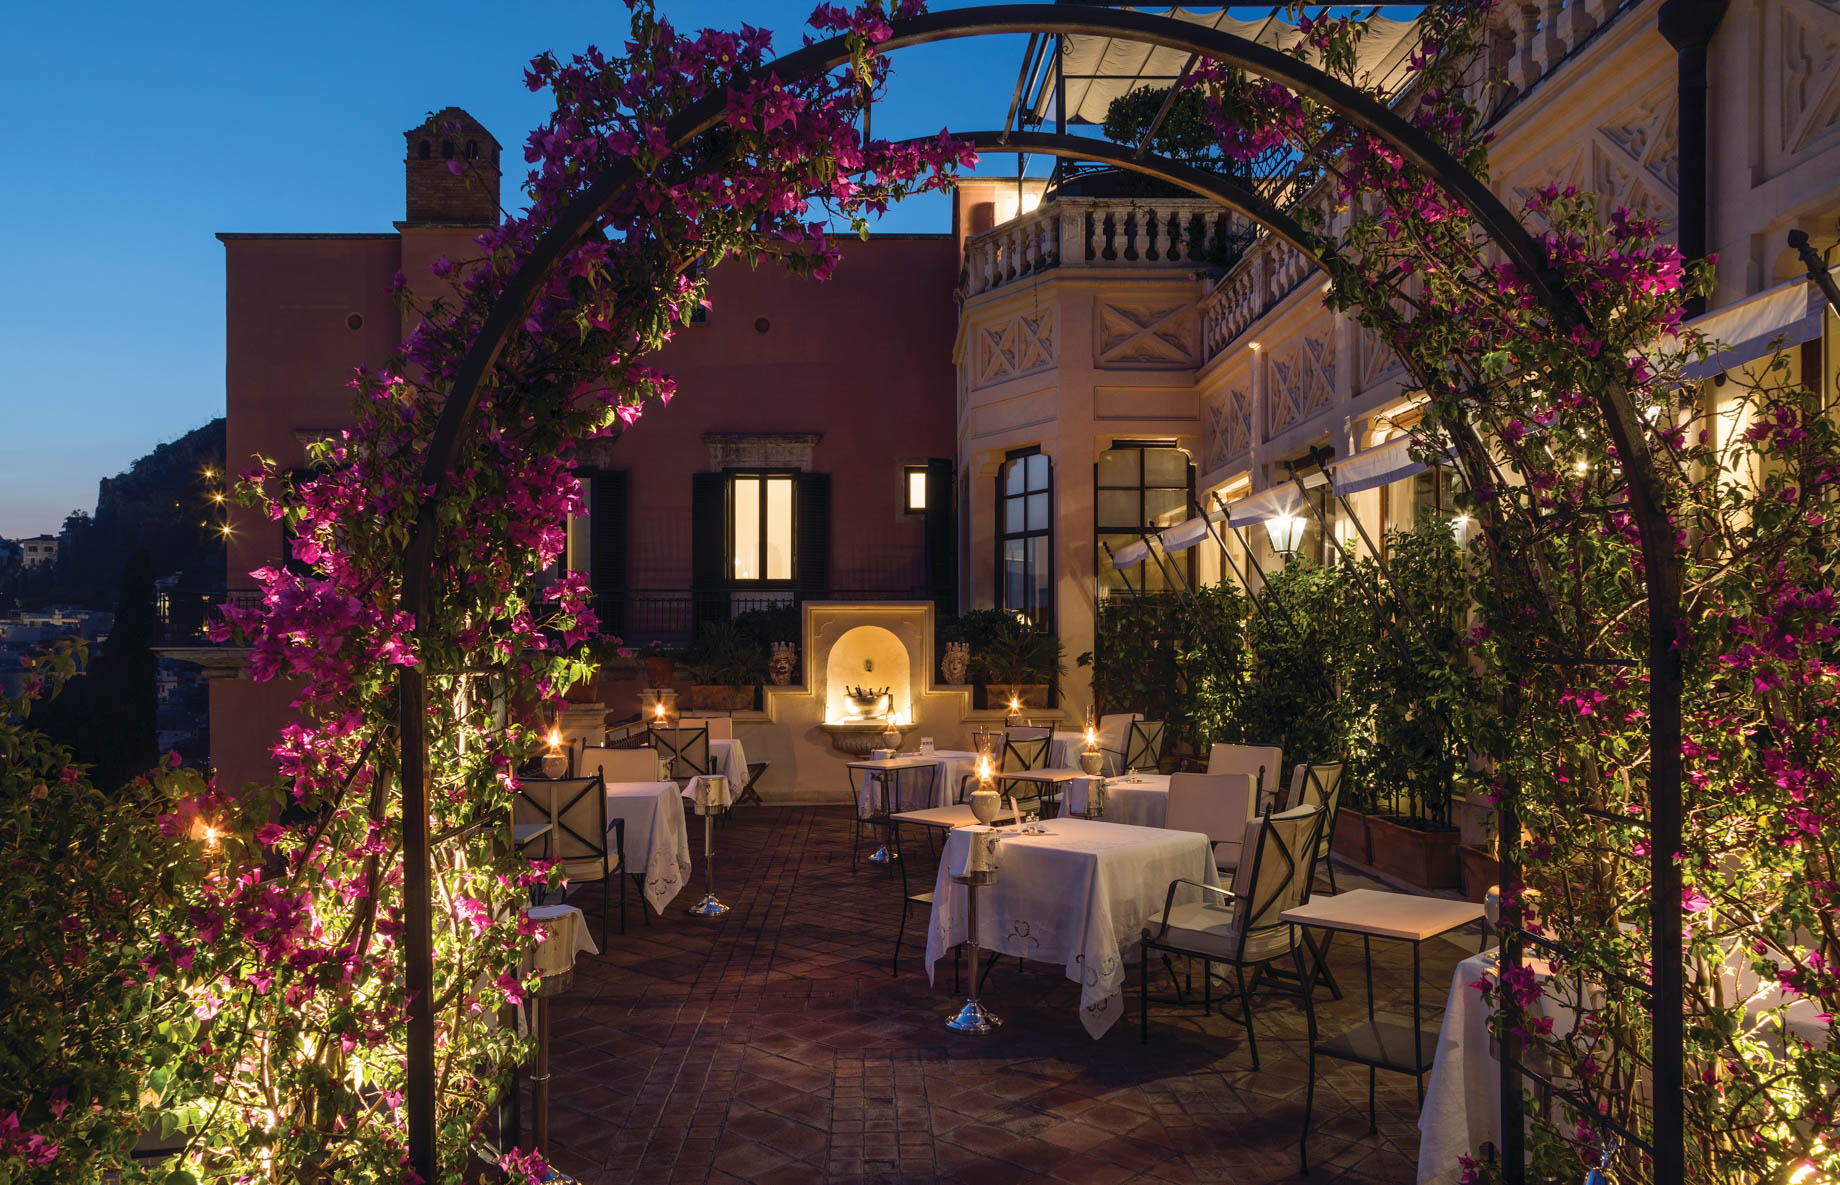 195 – Grand Hotel Timeo, A Belmond Hotel – Taormina, Italy